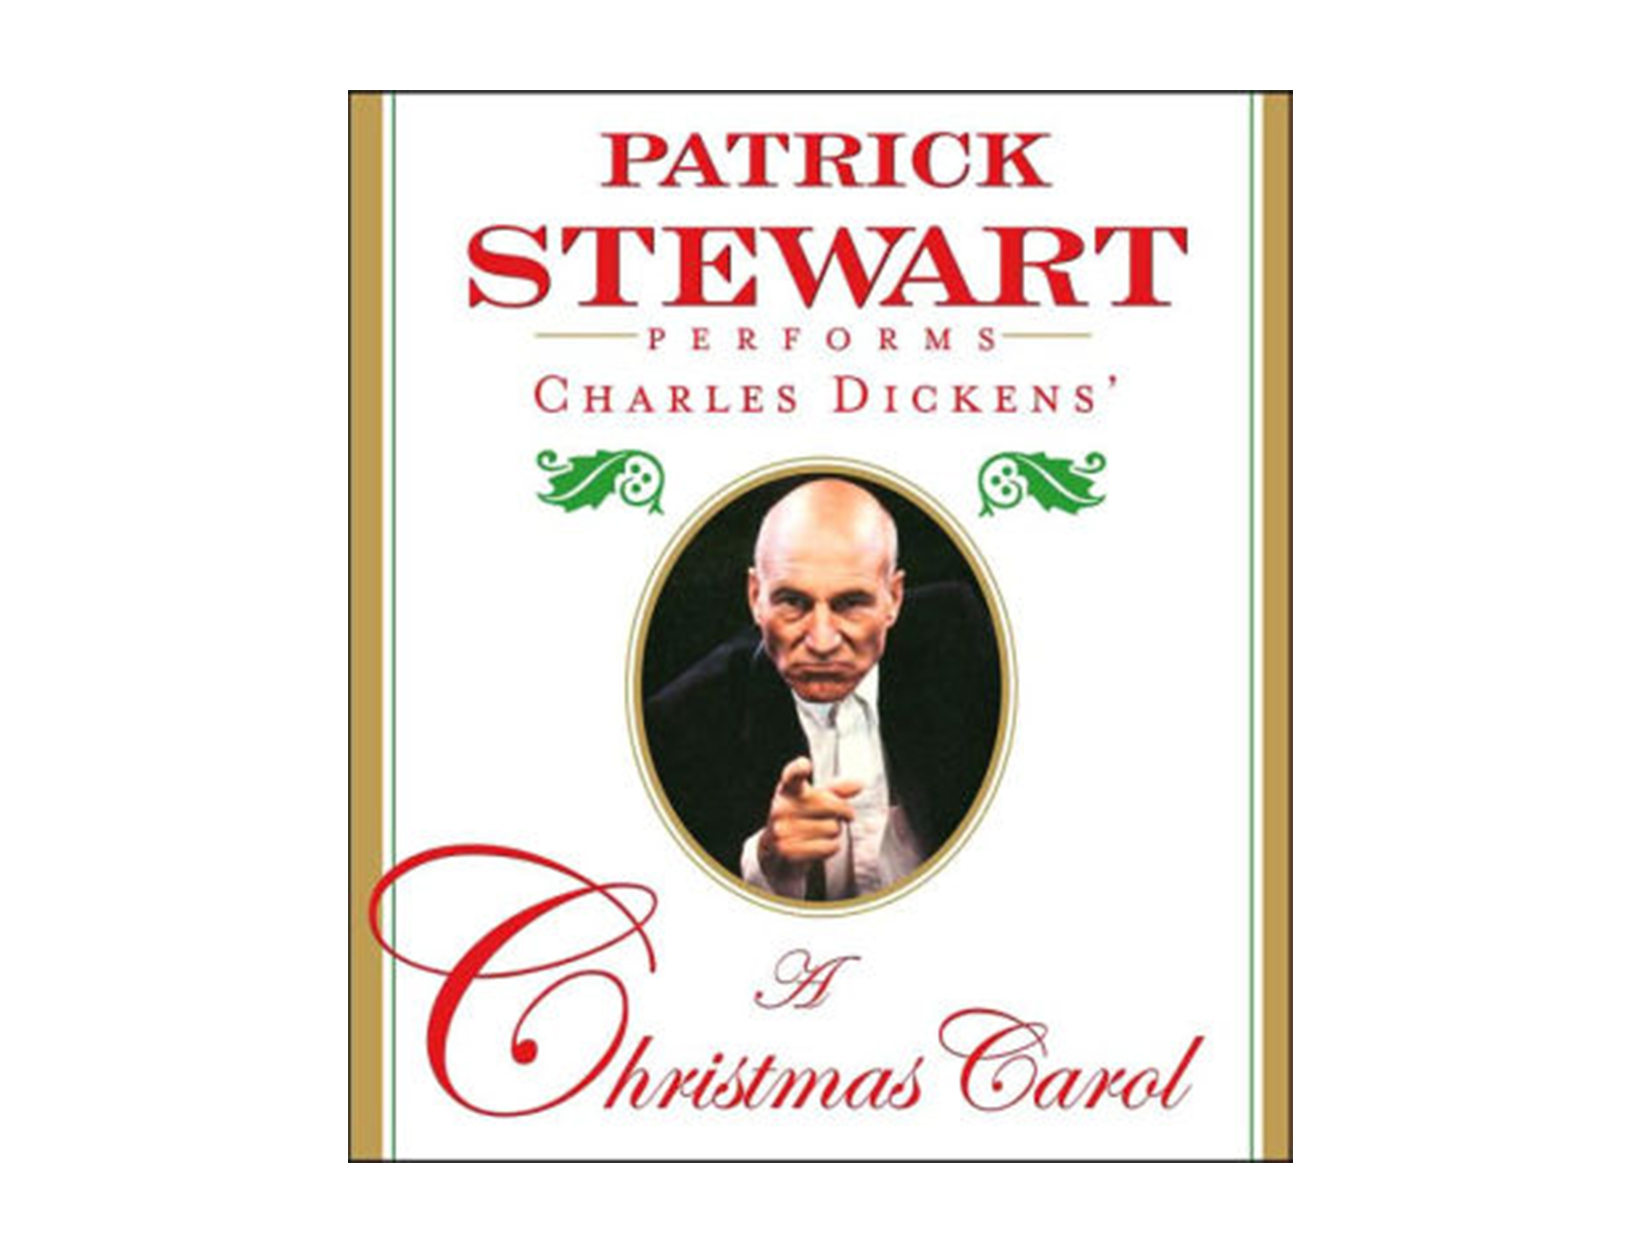 Charles Dickens’s A Christmas Carol performed by Patrick Stewart